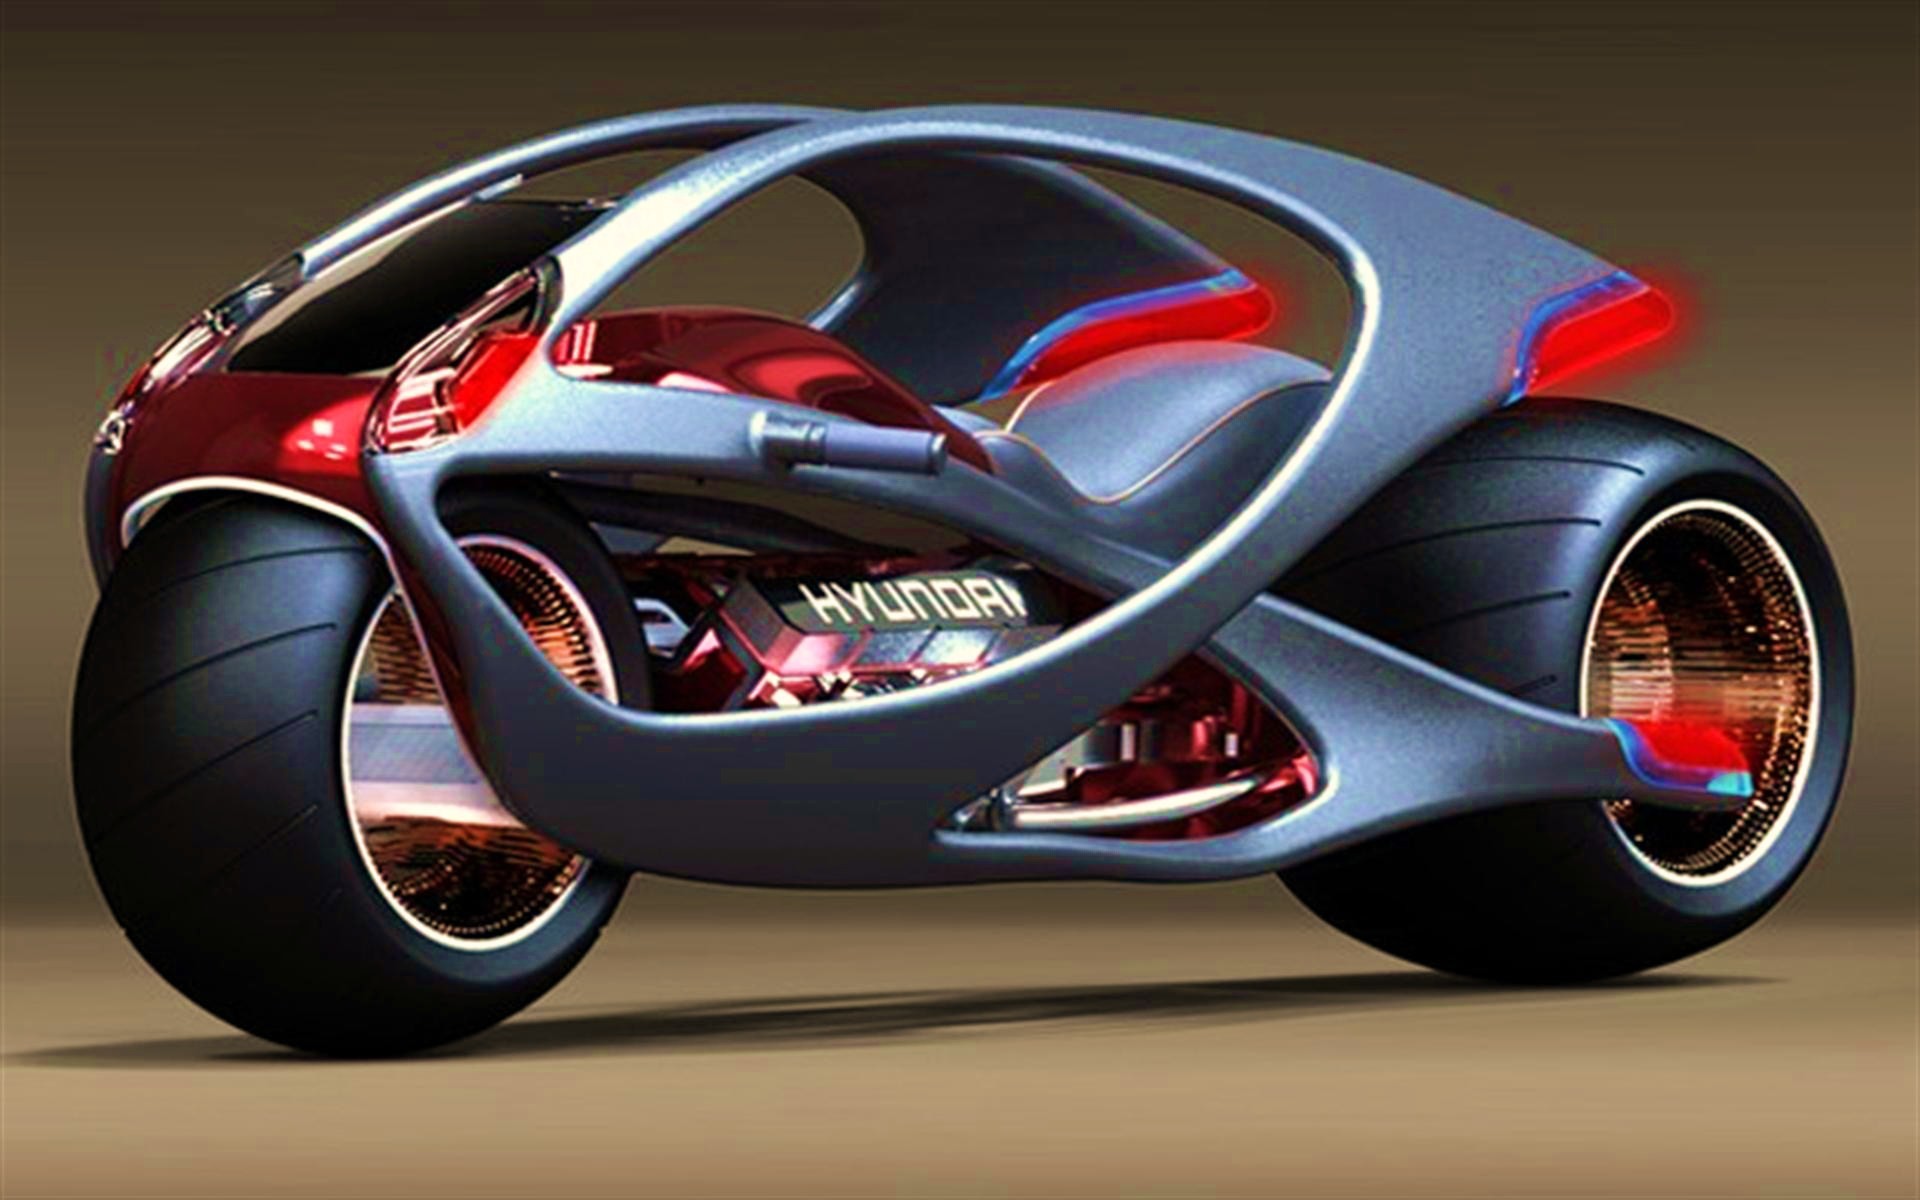 Автомобили байк модельный. Футуристический байк концепт. Футуристичный концепт мотоцикла. Мотоцикл Мицубиси концепт. Мотоцикл BMW концепт спорт.